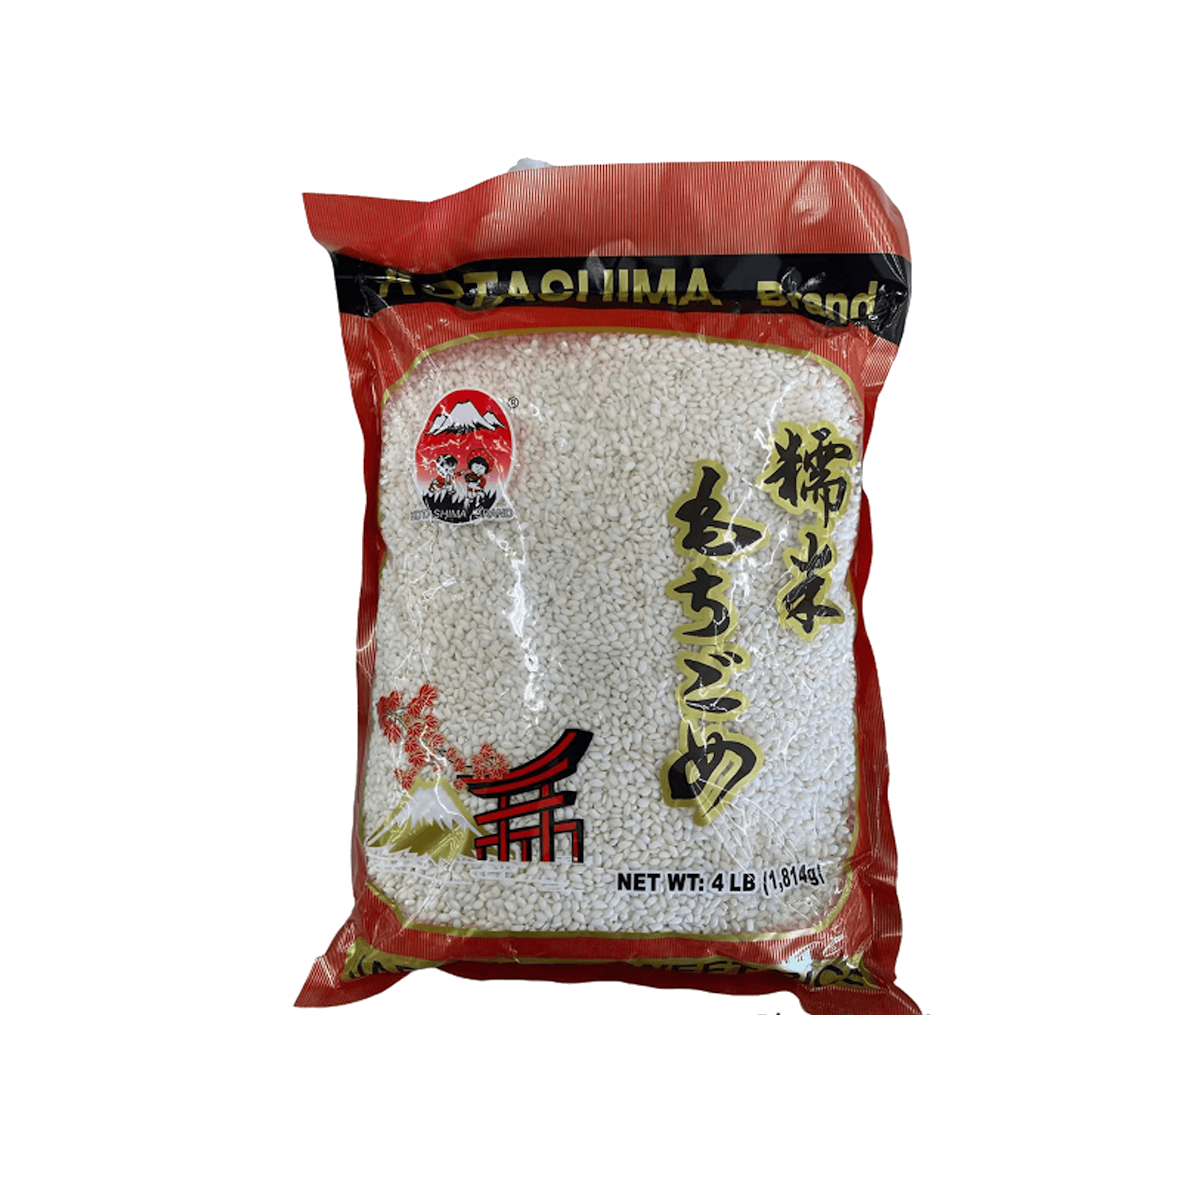 Kotashima Sweet Rice 4lb